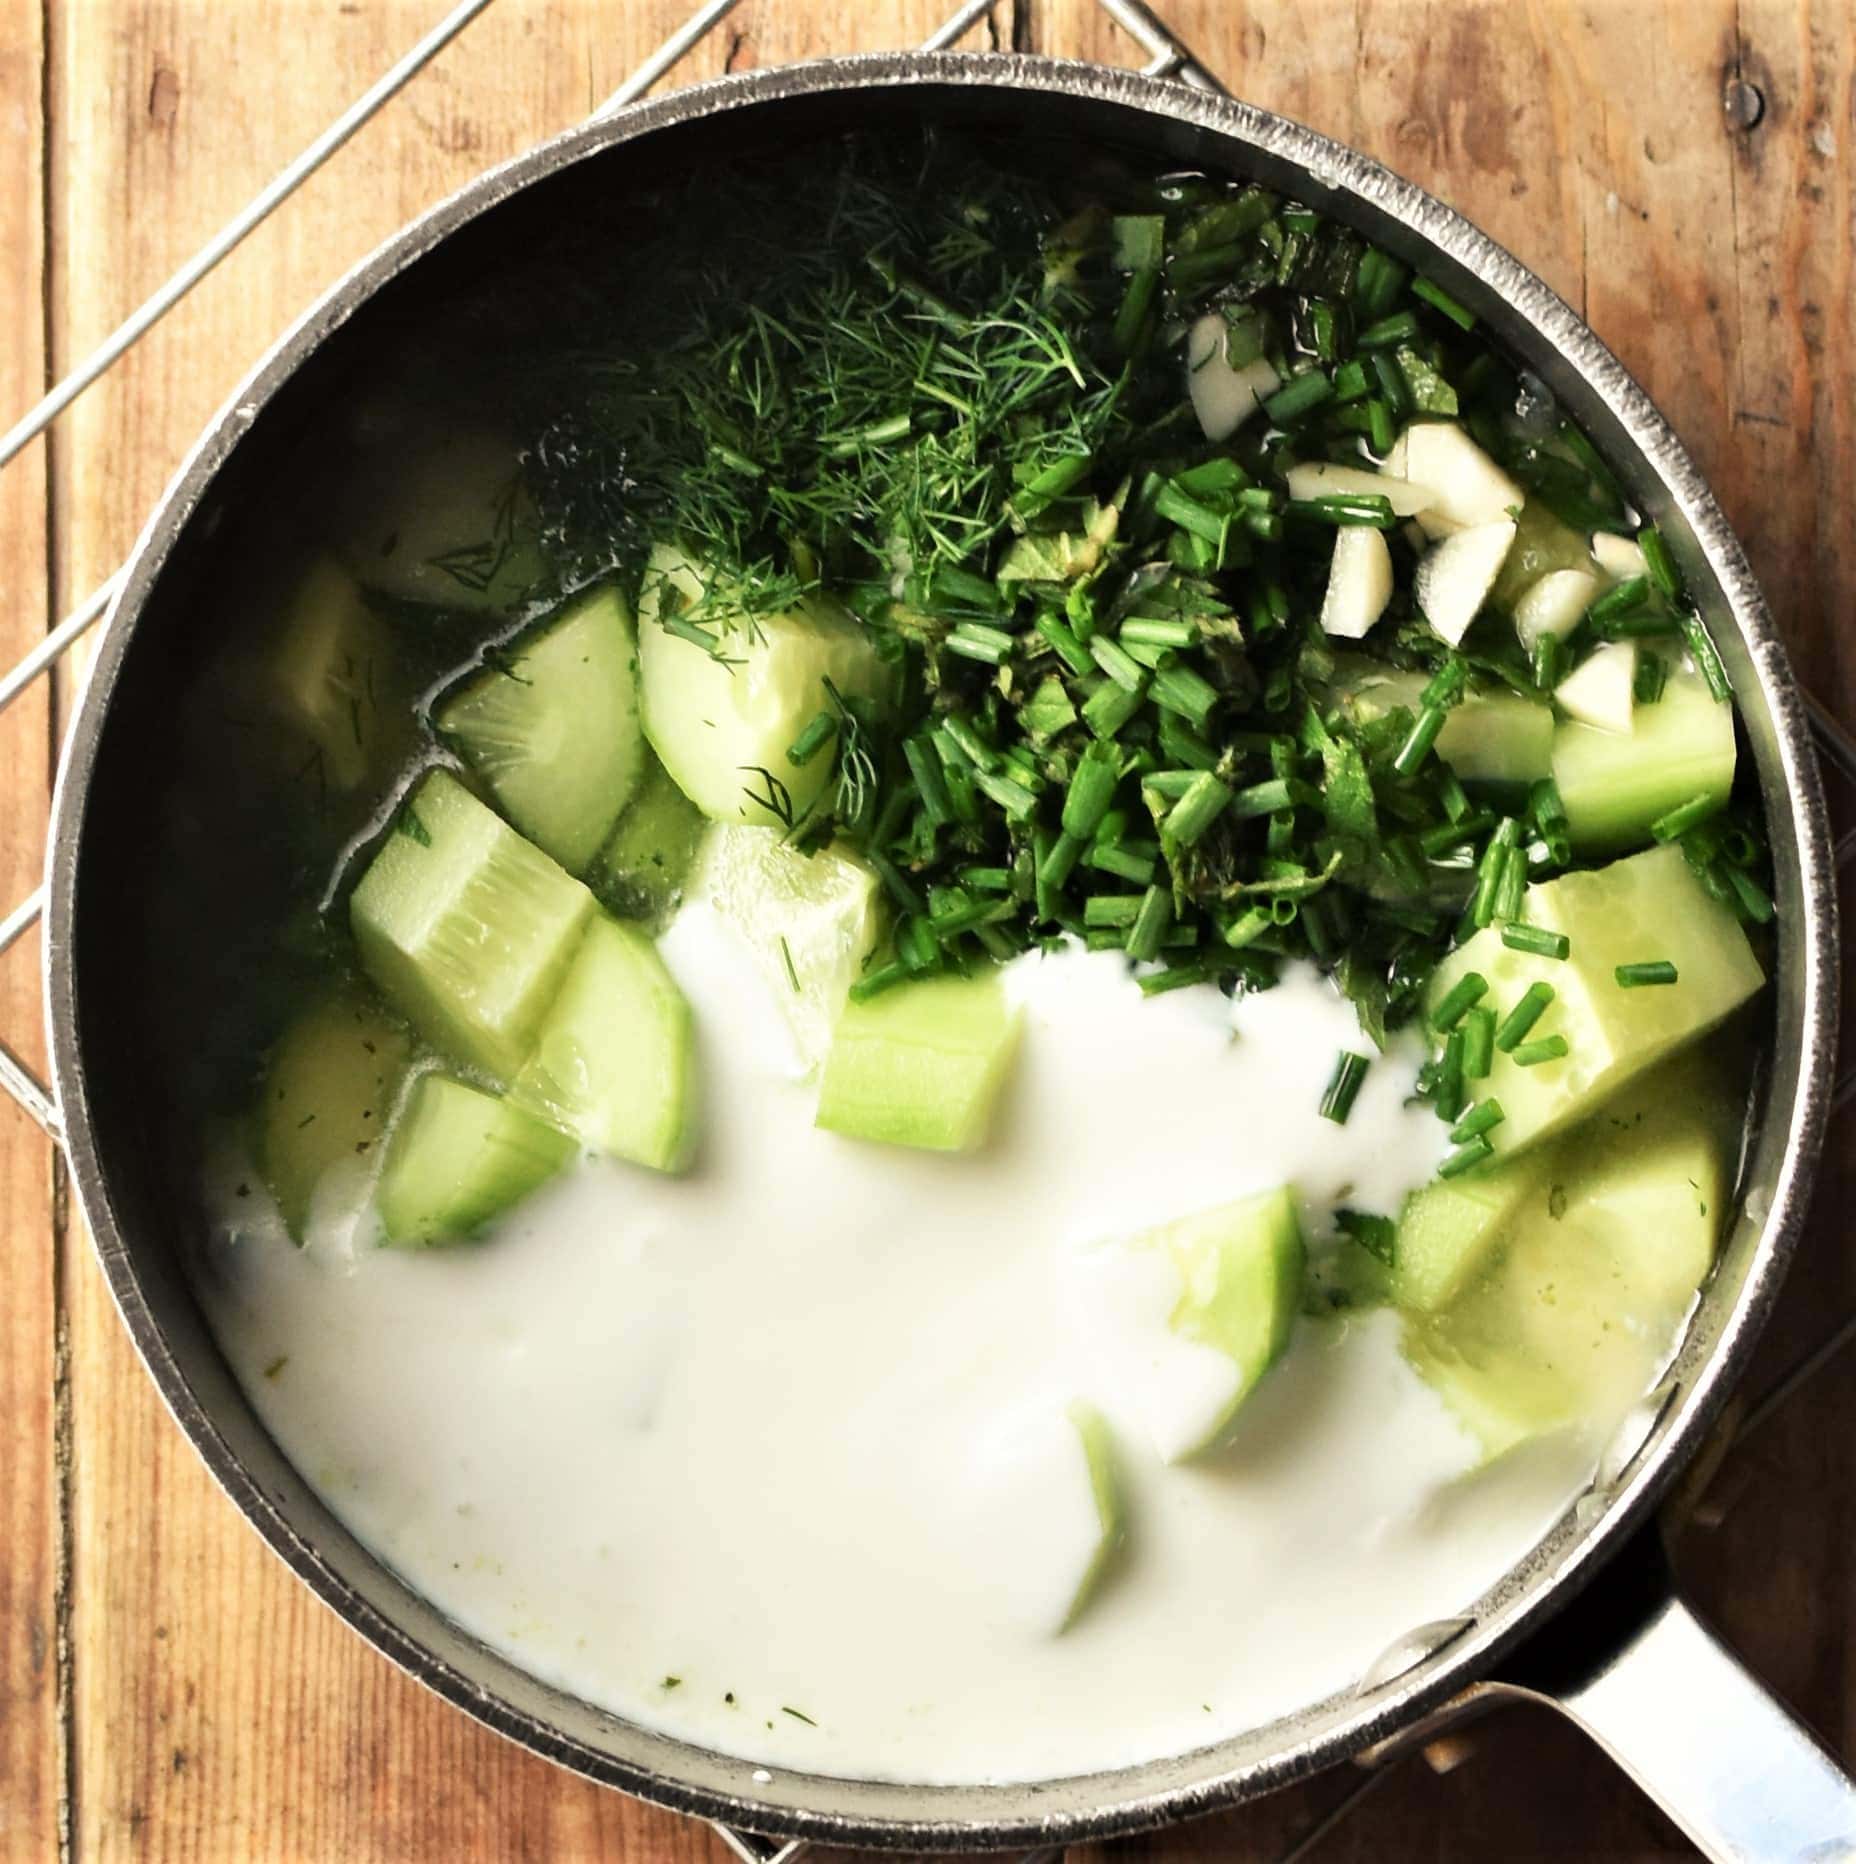 Cubed cucumber, herbs, peas and yogurt in pot.